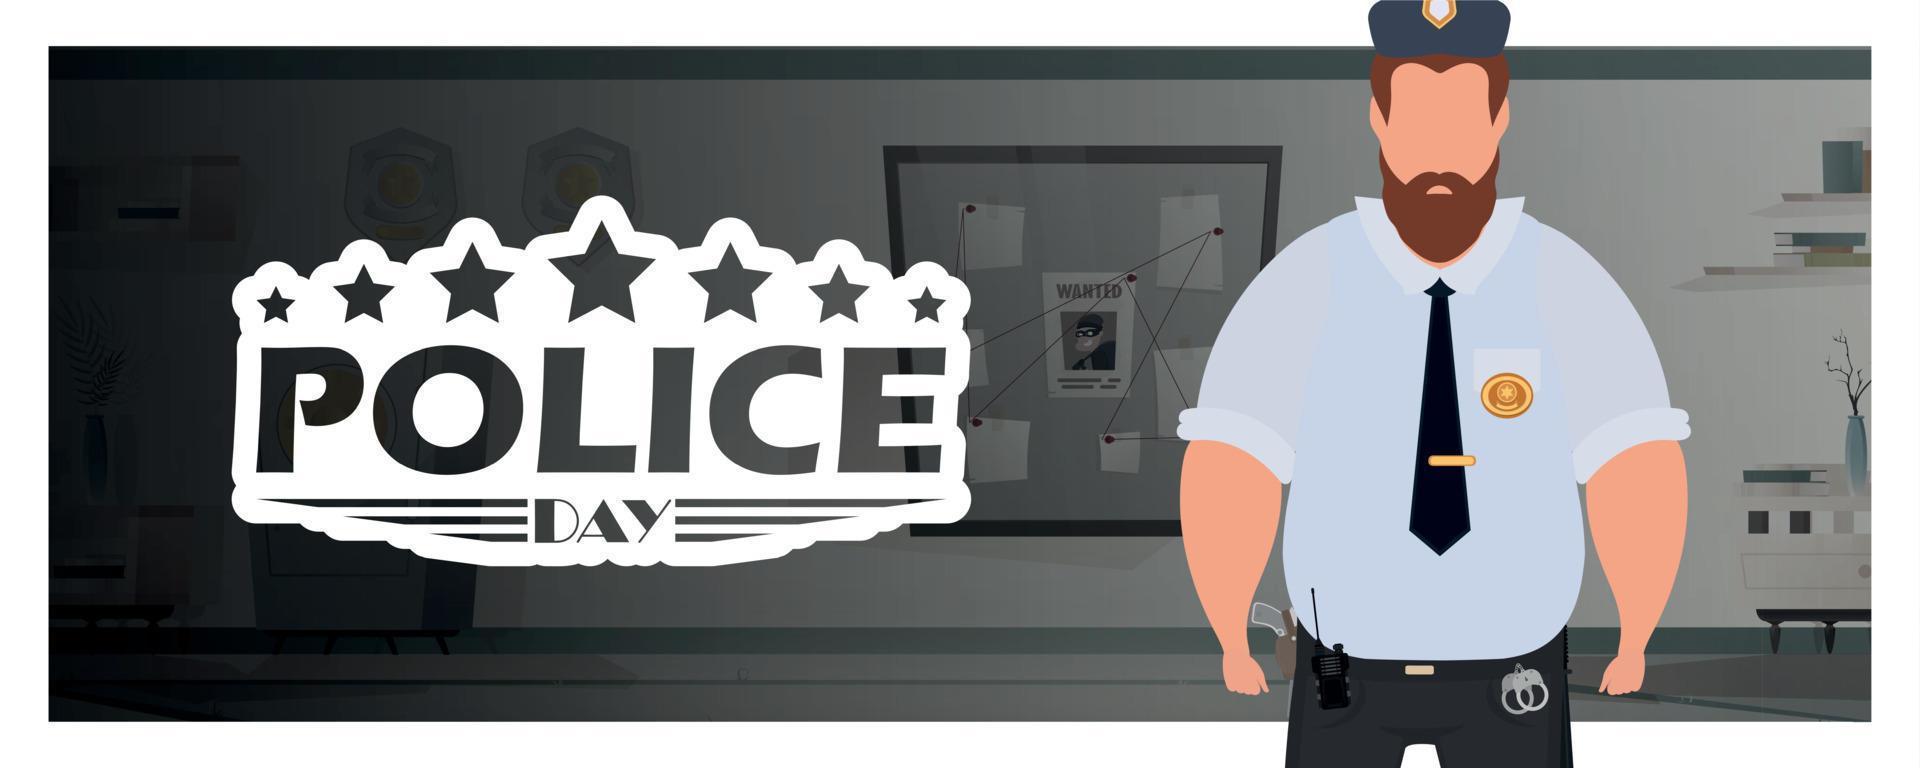 Poster Police Day Defender's Day. Vector illustration.